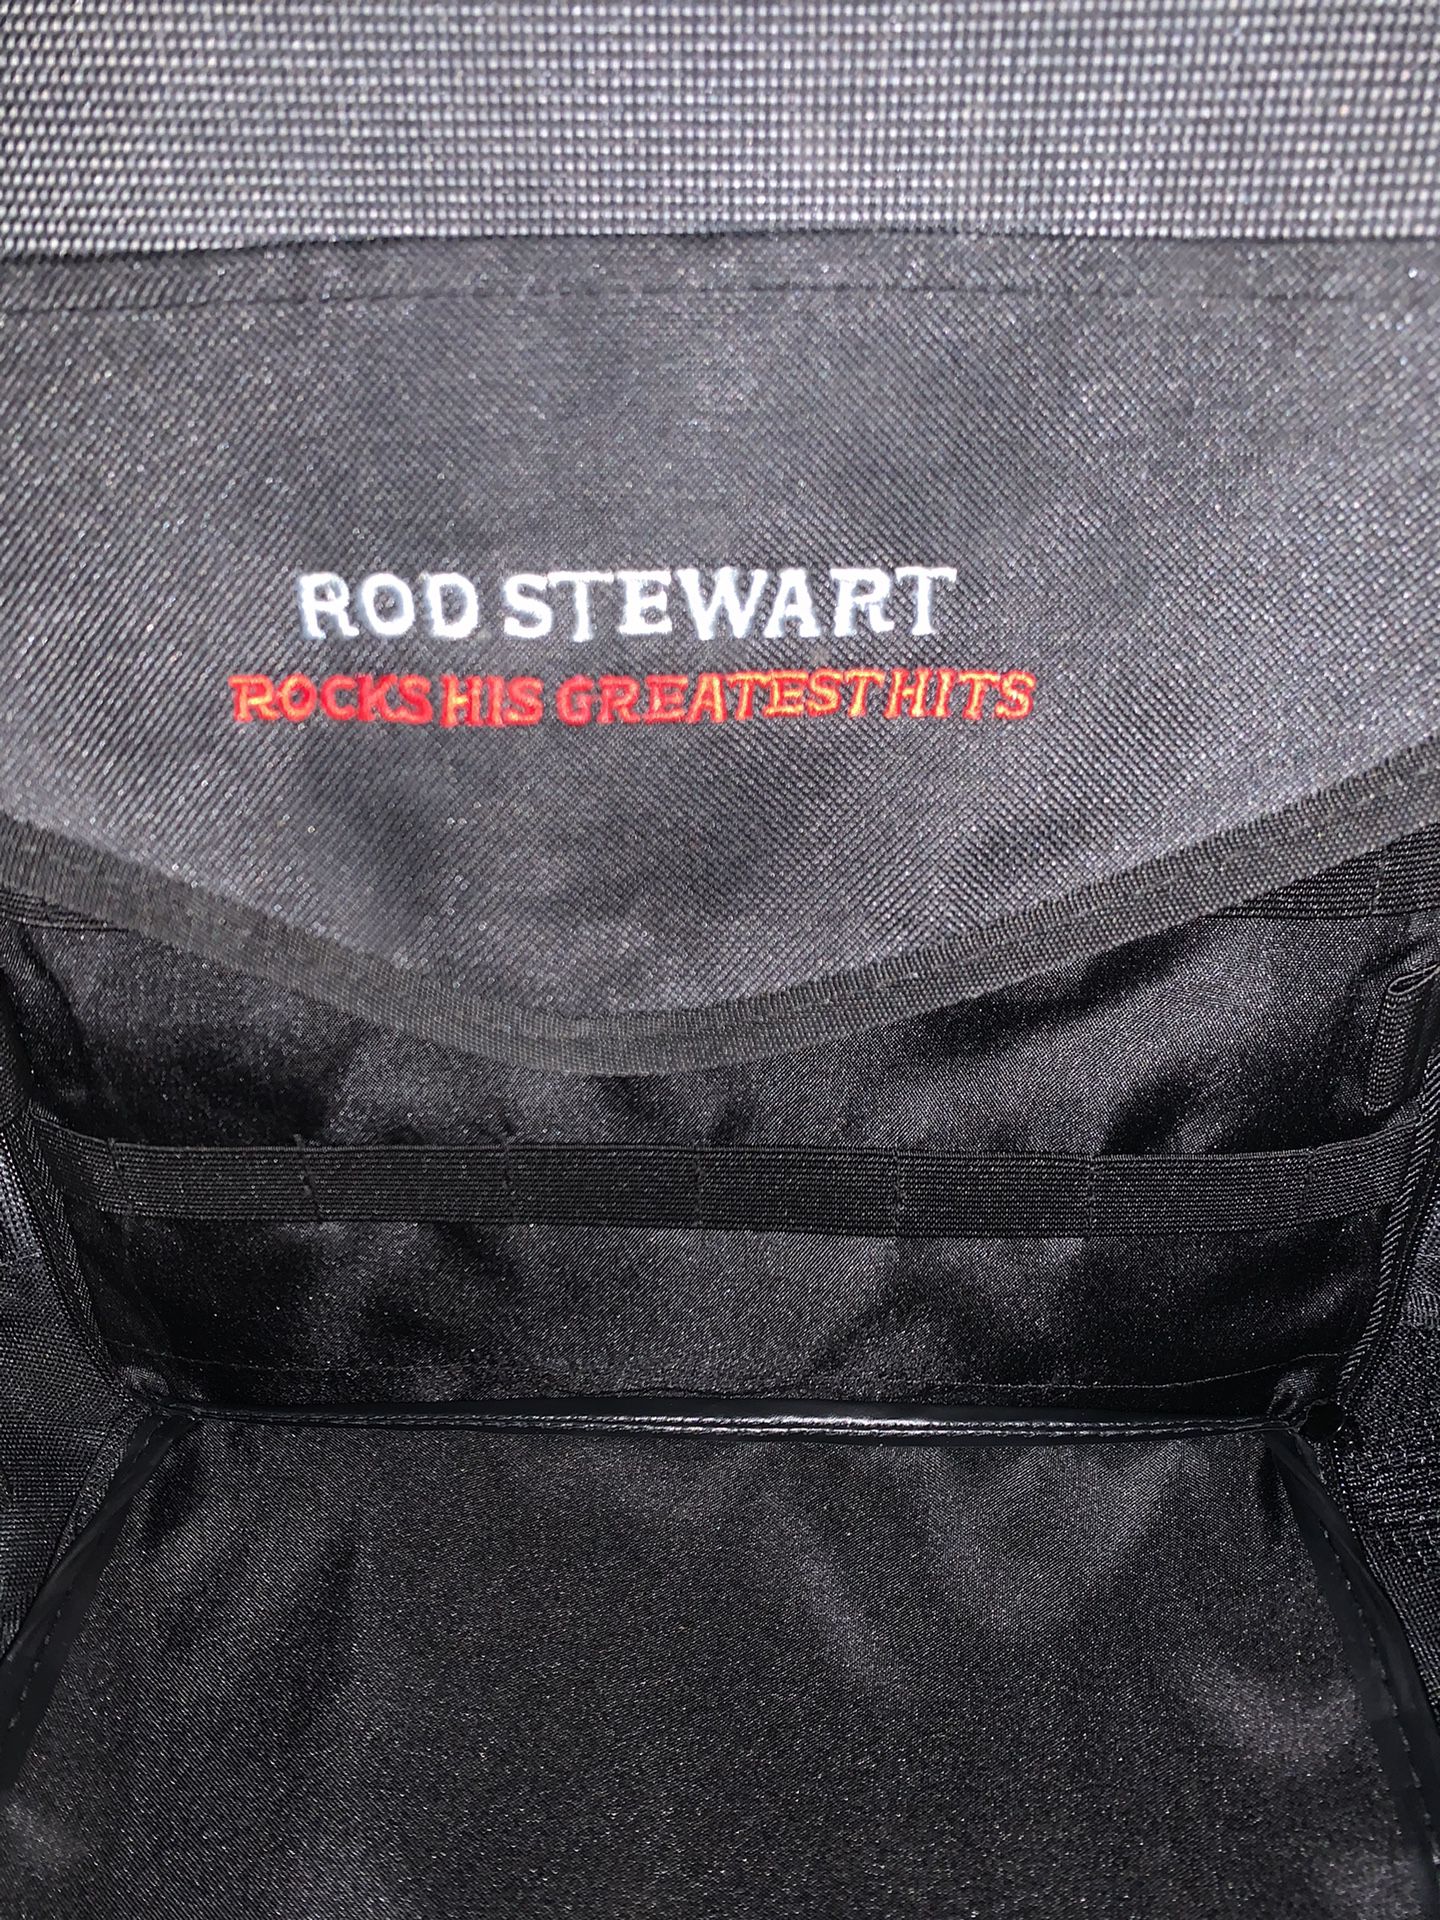 Rod Stewart Picnic Bag!